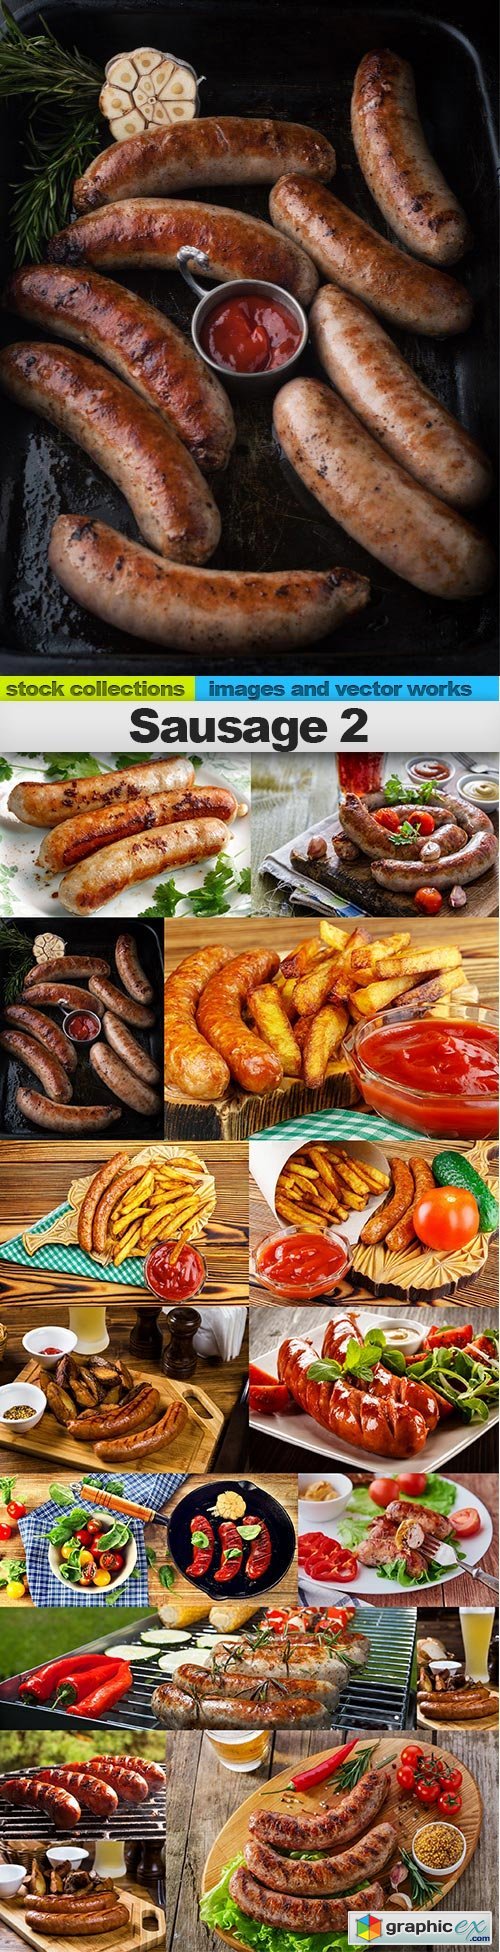 Sausage 2, 15 x UHQ JPEG